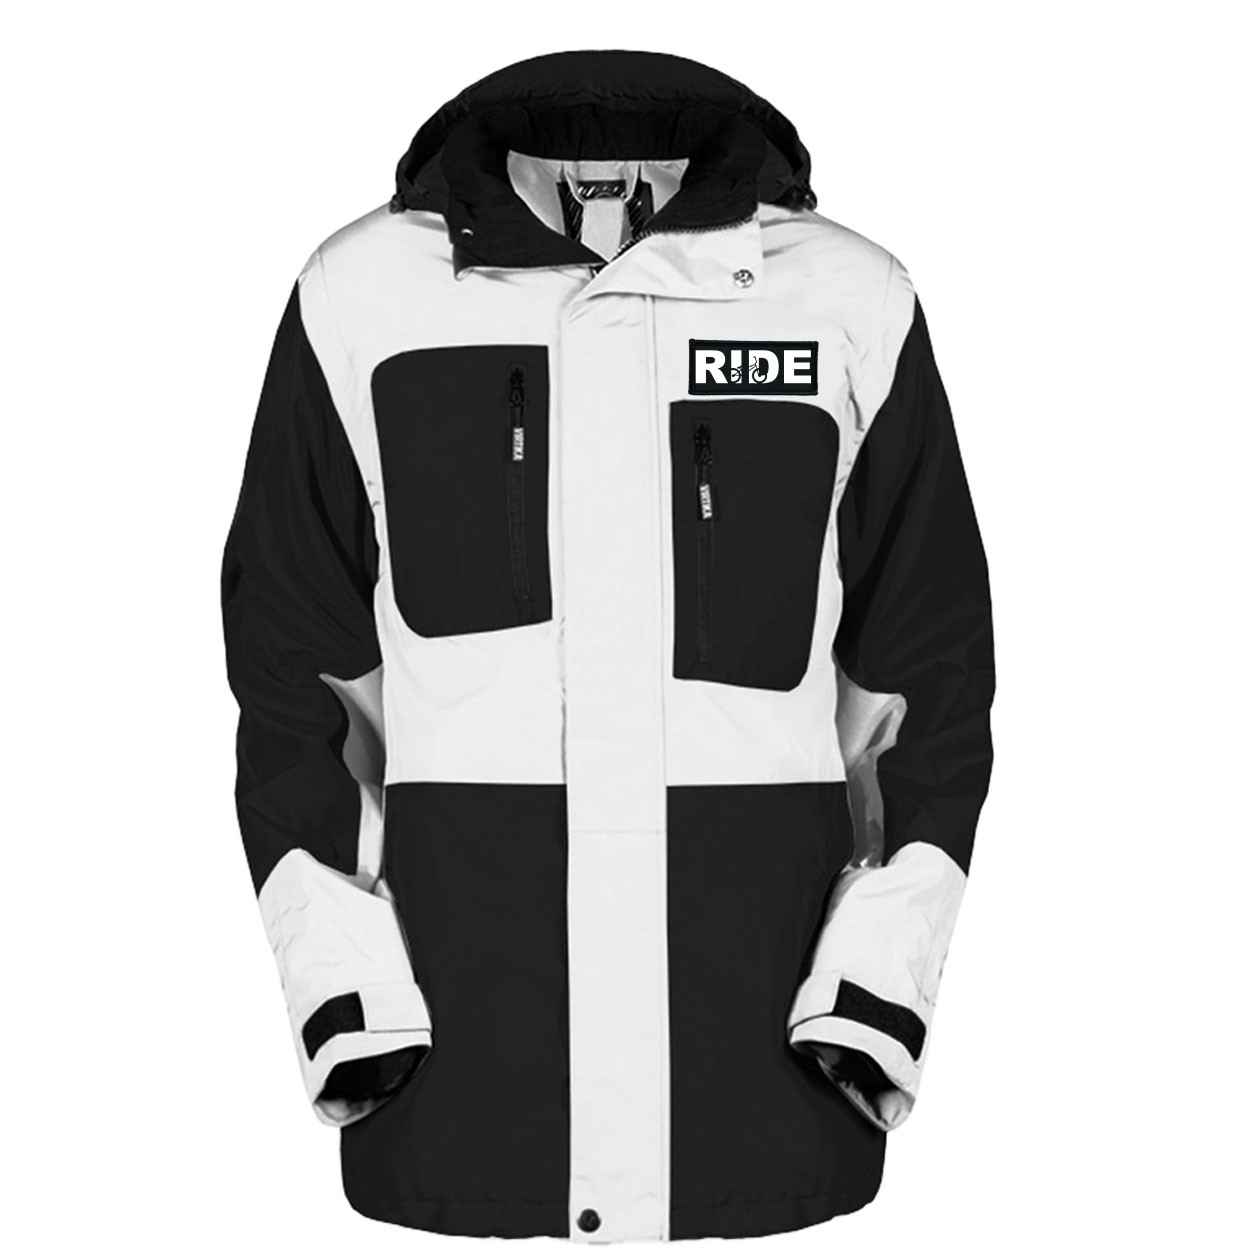 Ride BMX Logo Pro Waterproof Breathable Winter Virtika Jacket Black/White (White Logo)